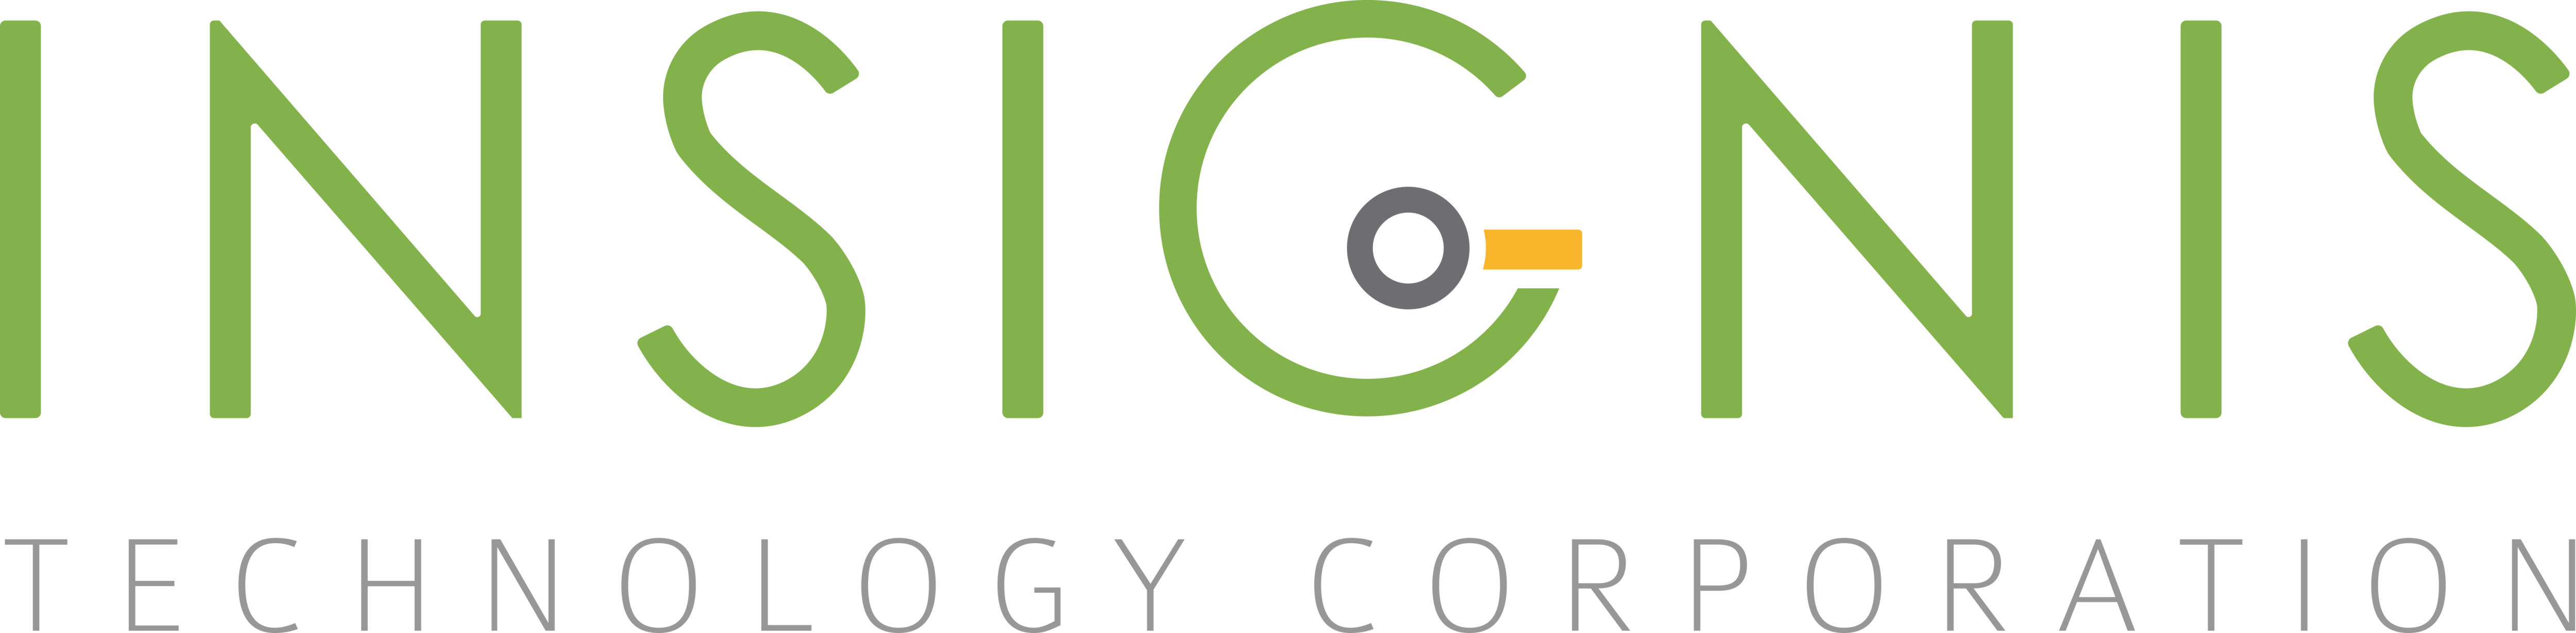 Insignis Technology Corporation LOGO